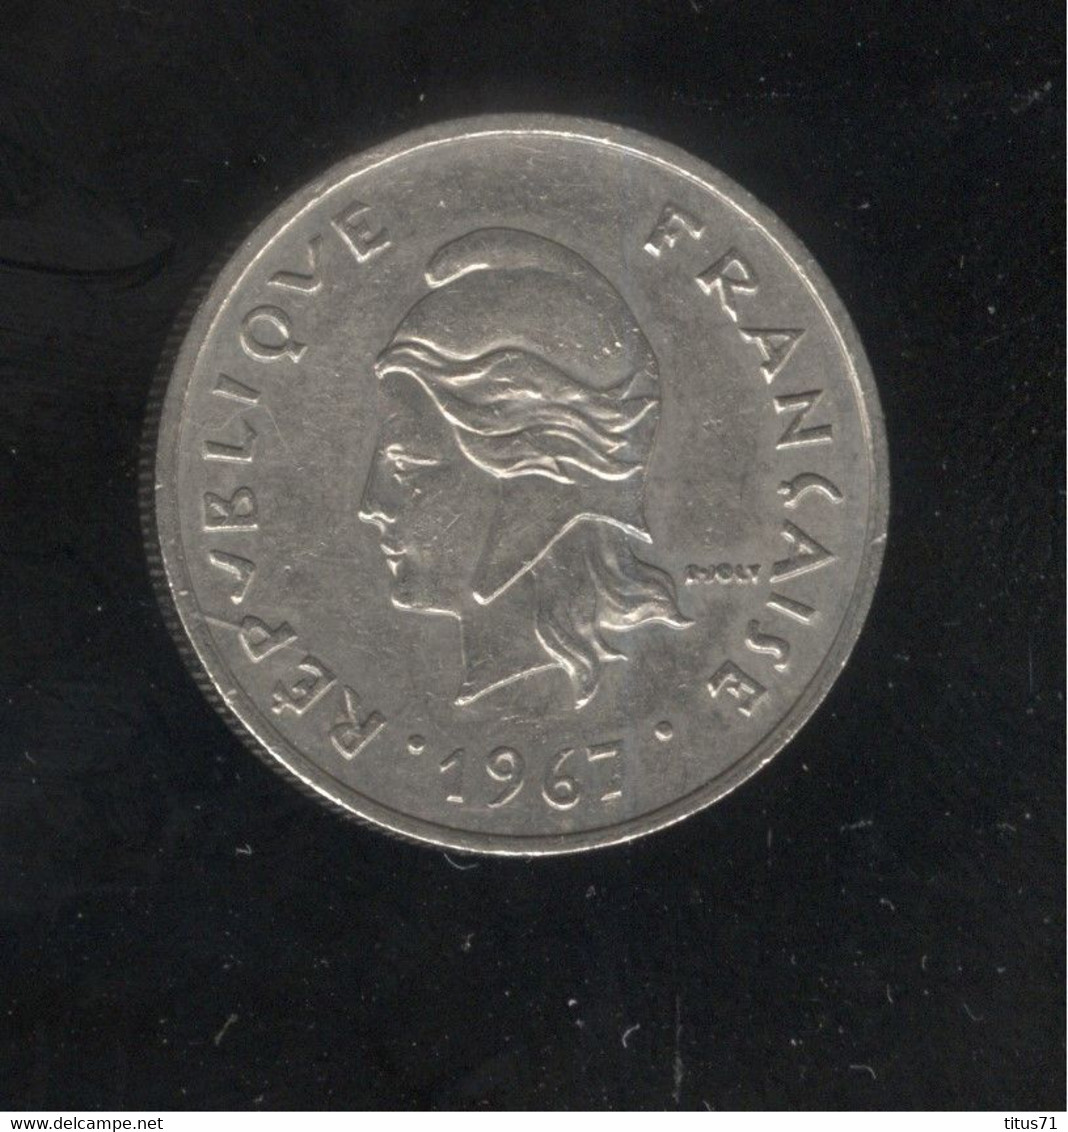 10 Francs Polynésie Française 1967 - French Polynesia